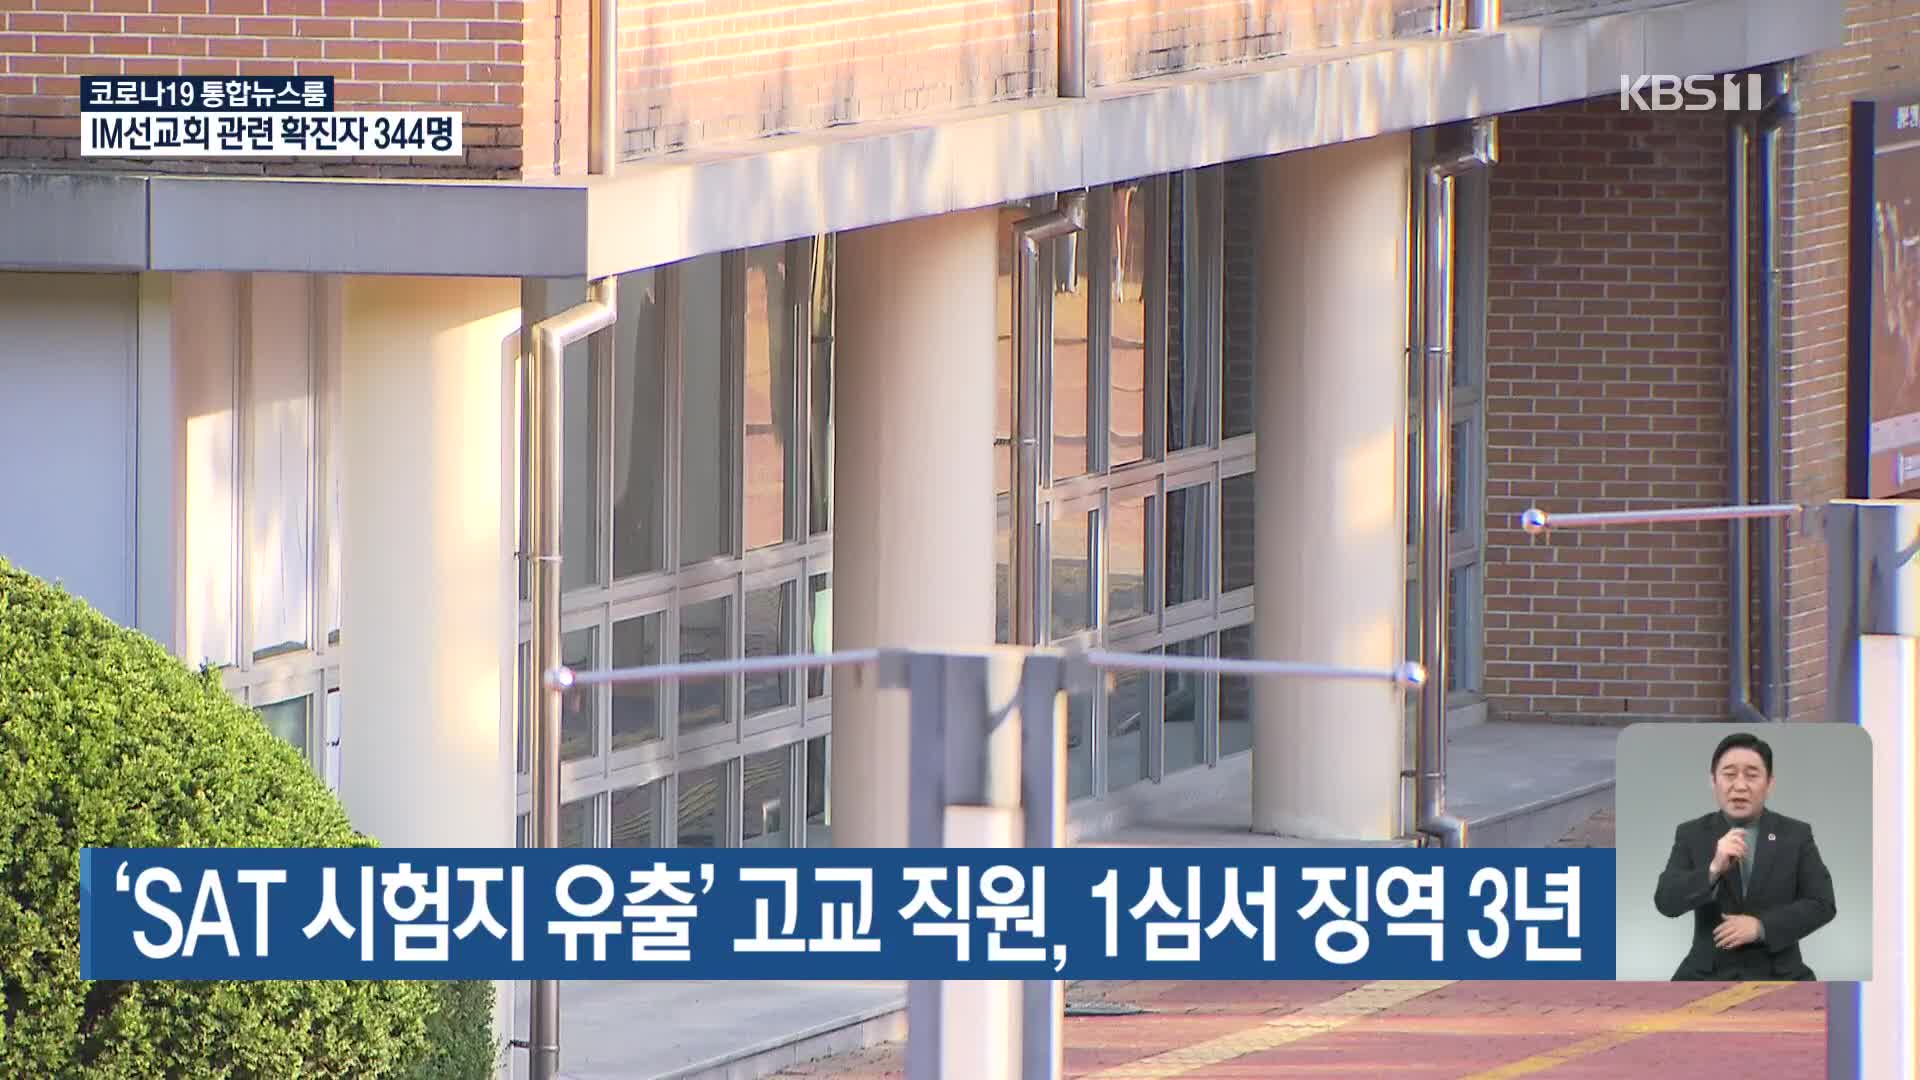 ‘SAT 시험지 유출’ 고교 직원, 1심서 징역 3년